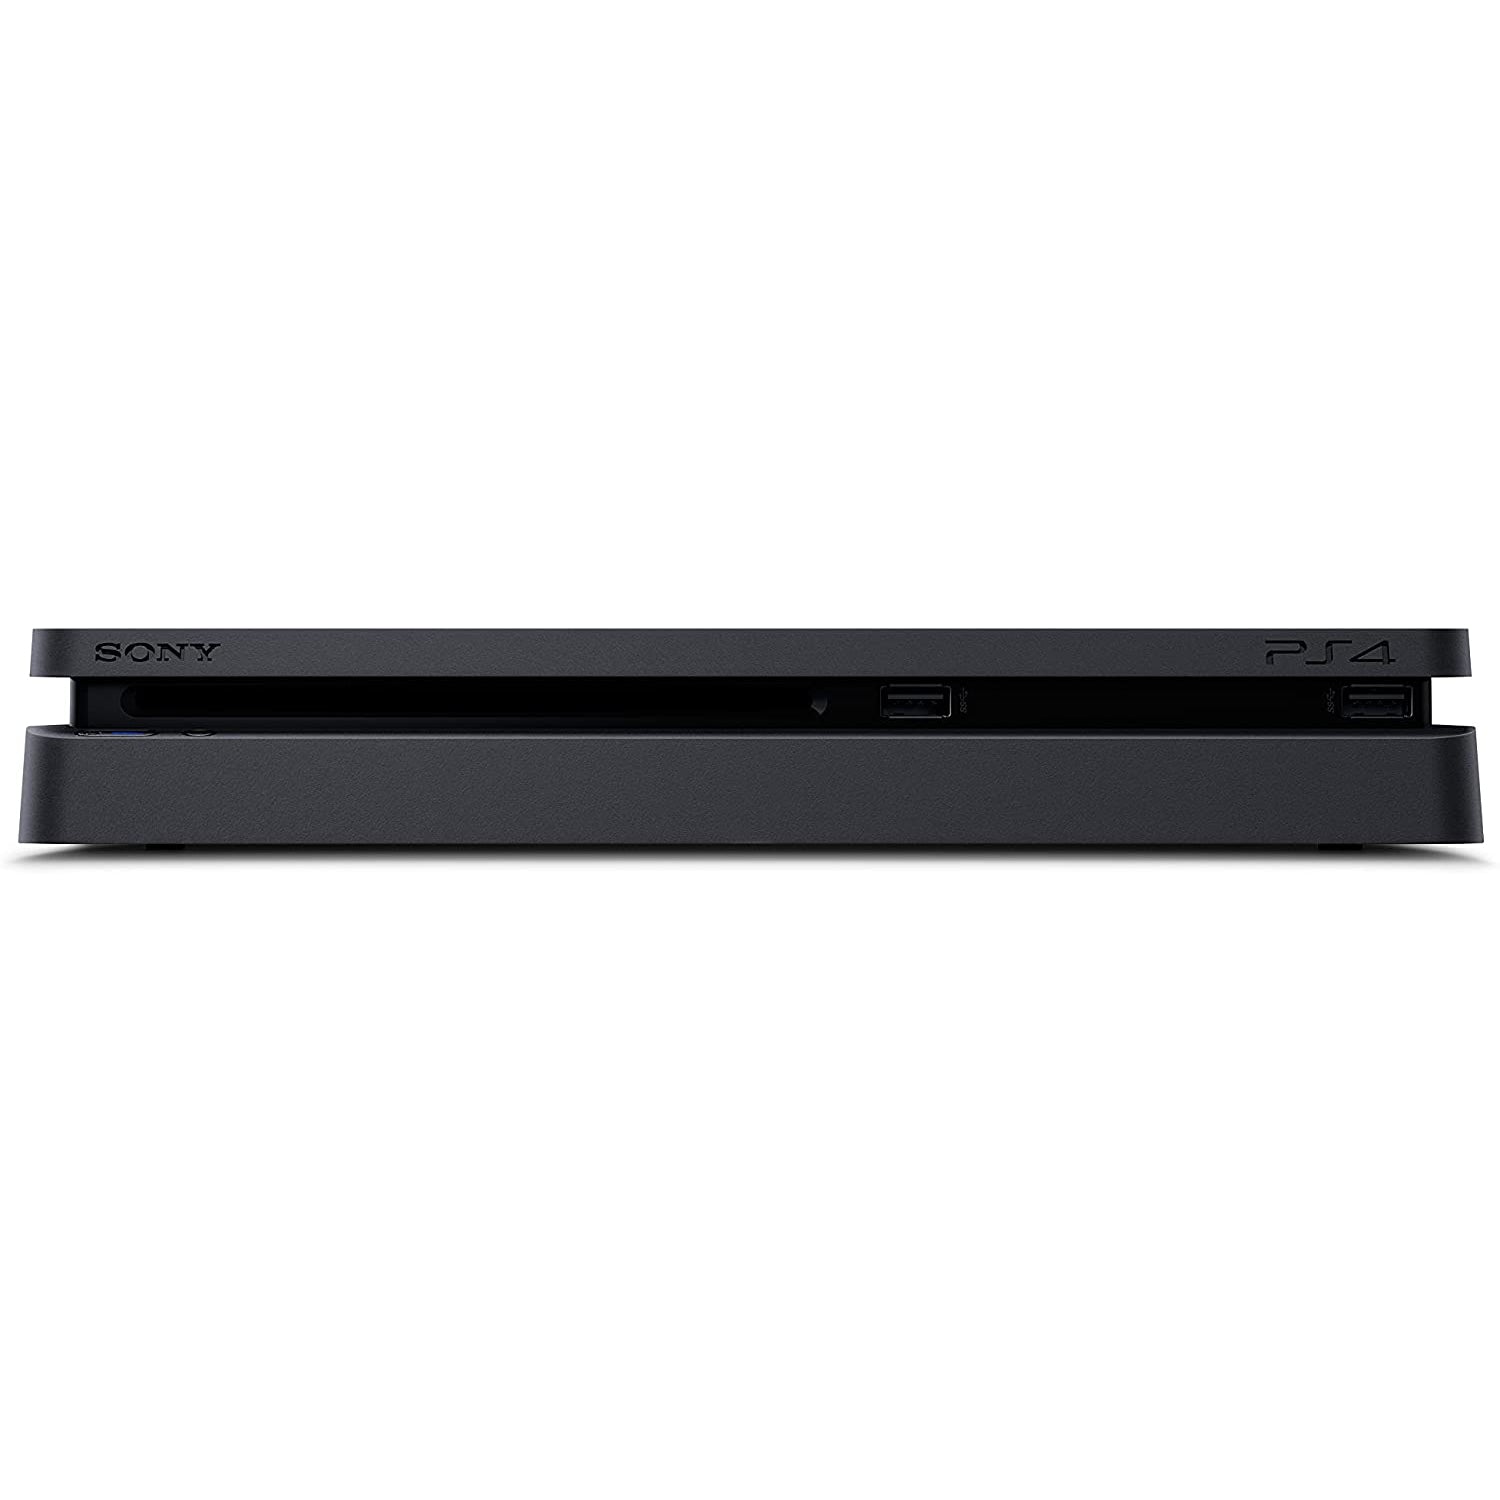 Sony PlayStation 4 Slim - 500GB - Black - Good | Stock Must Go